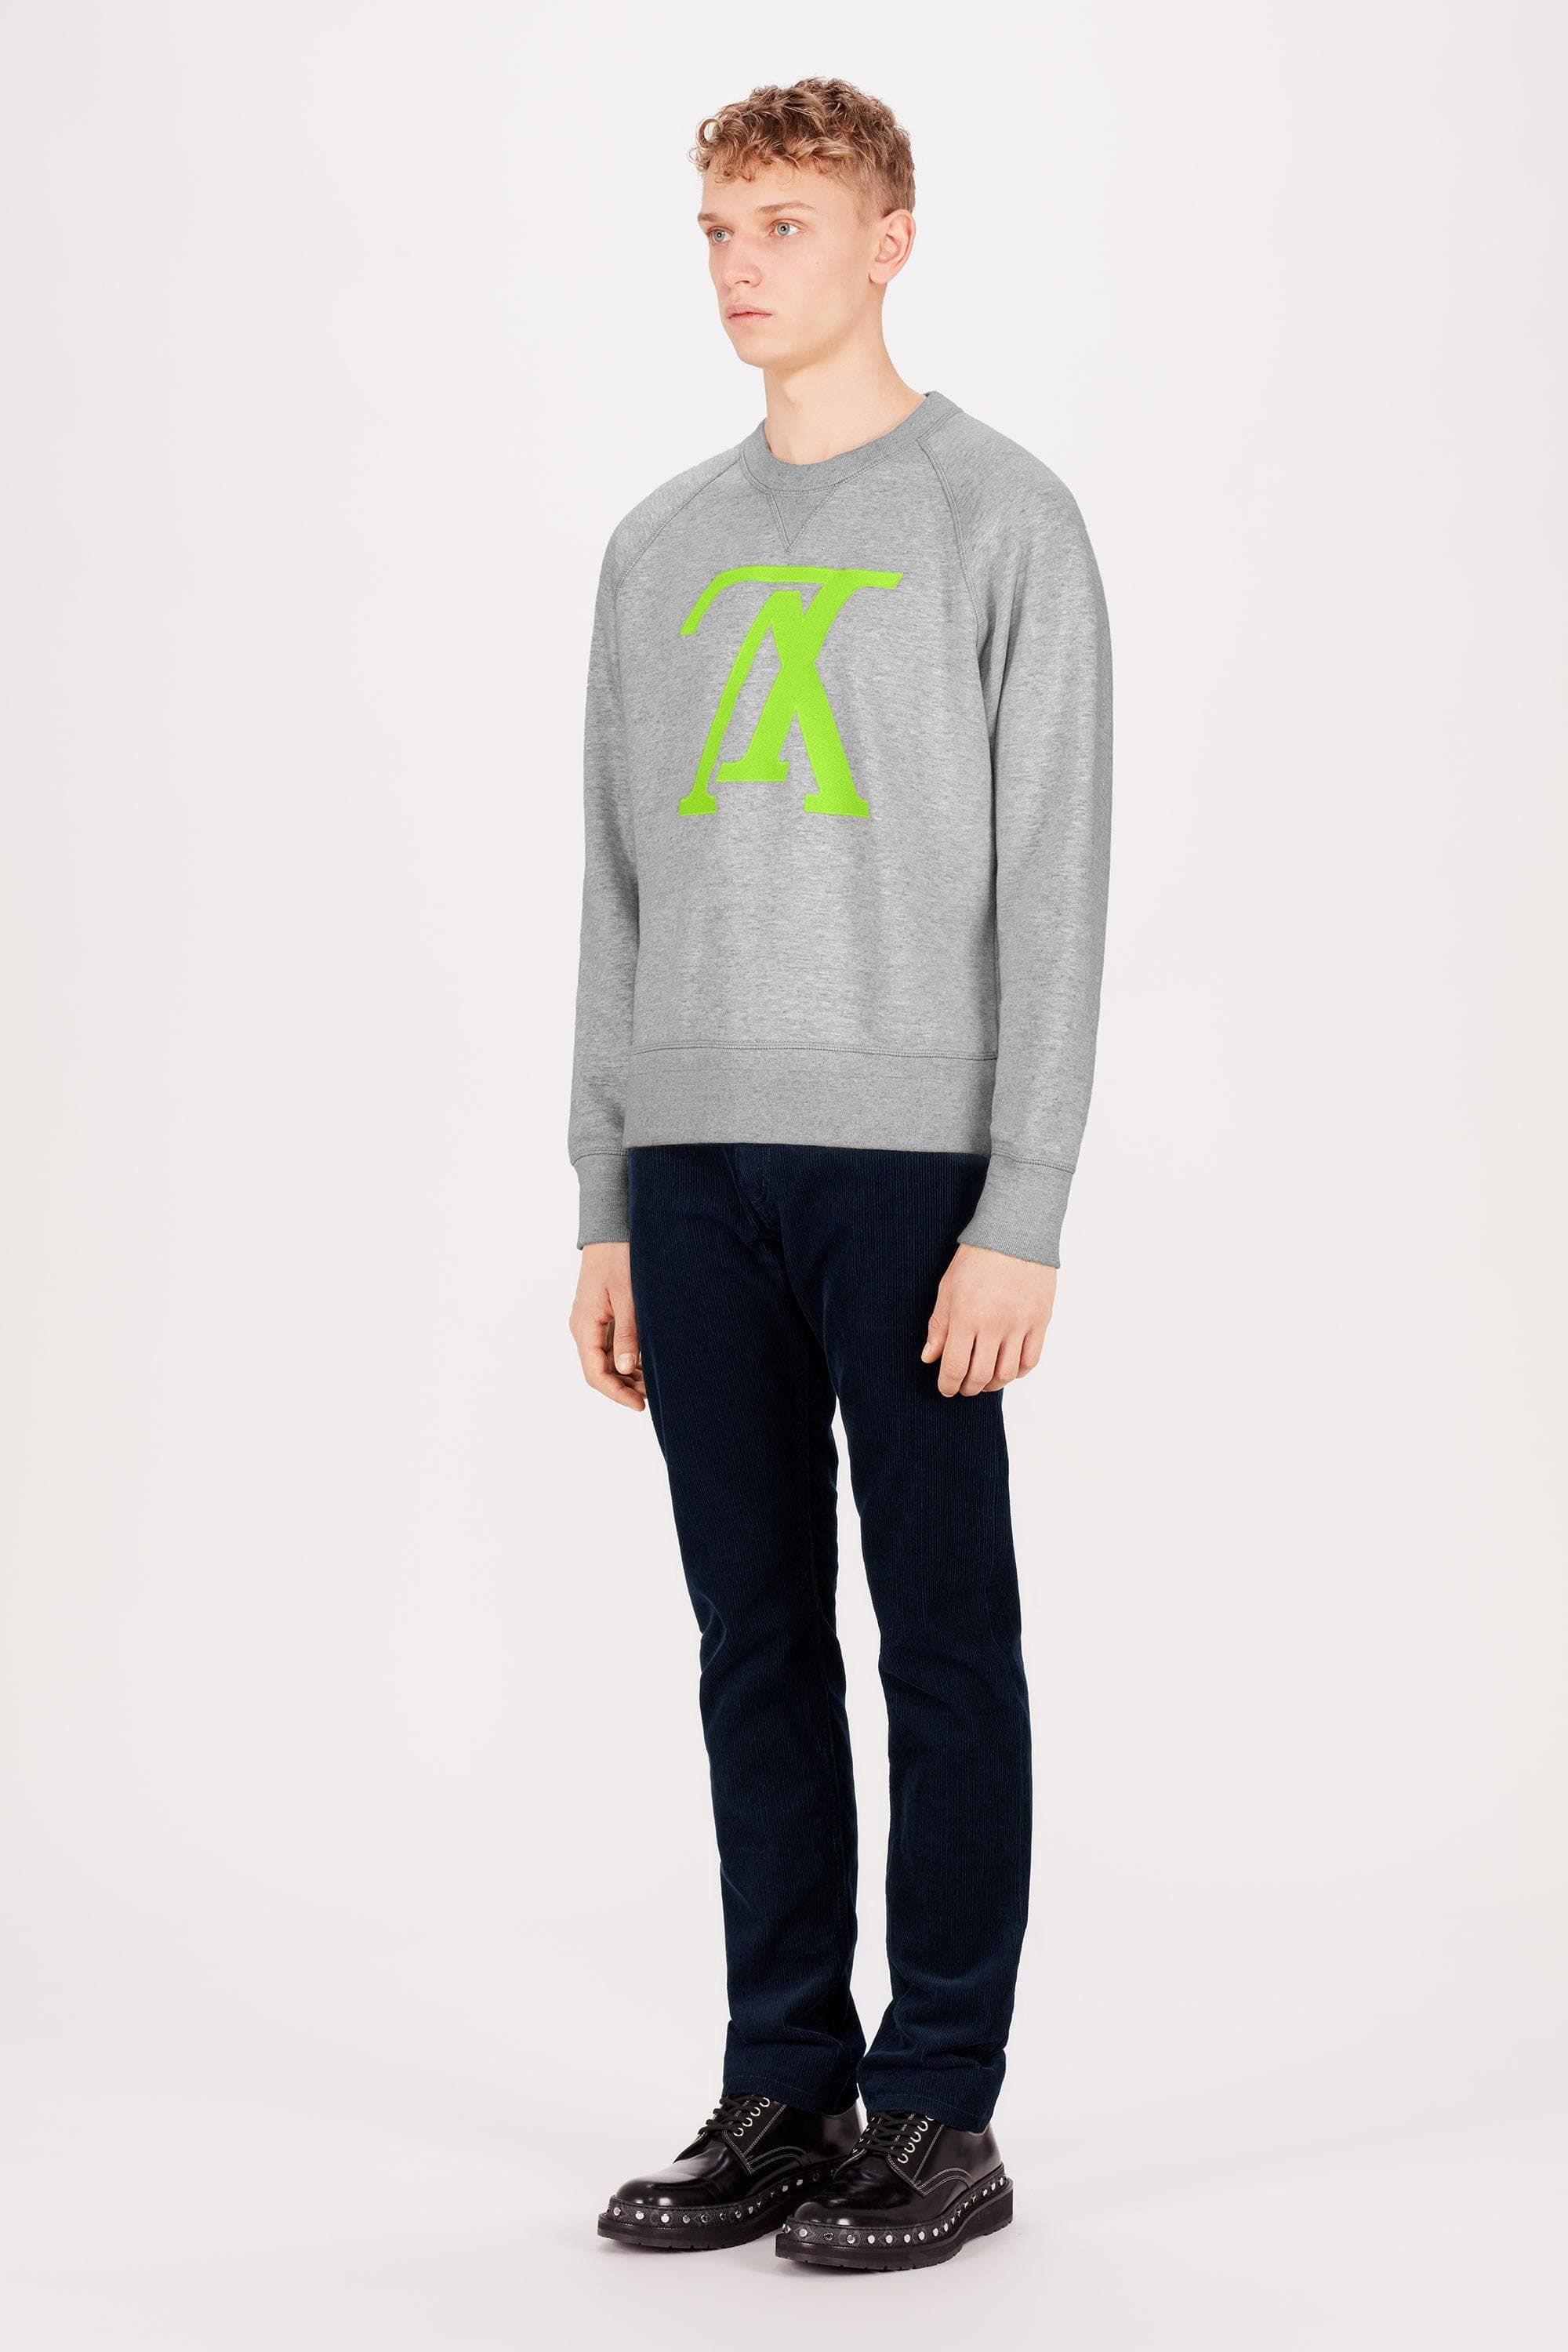 Louis Vuitton Upside Down LV Logo Sweatshirt